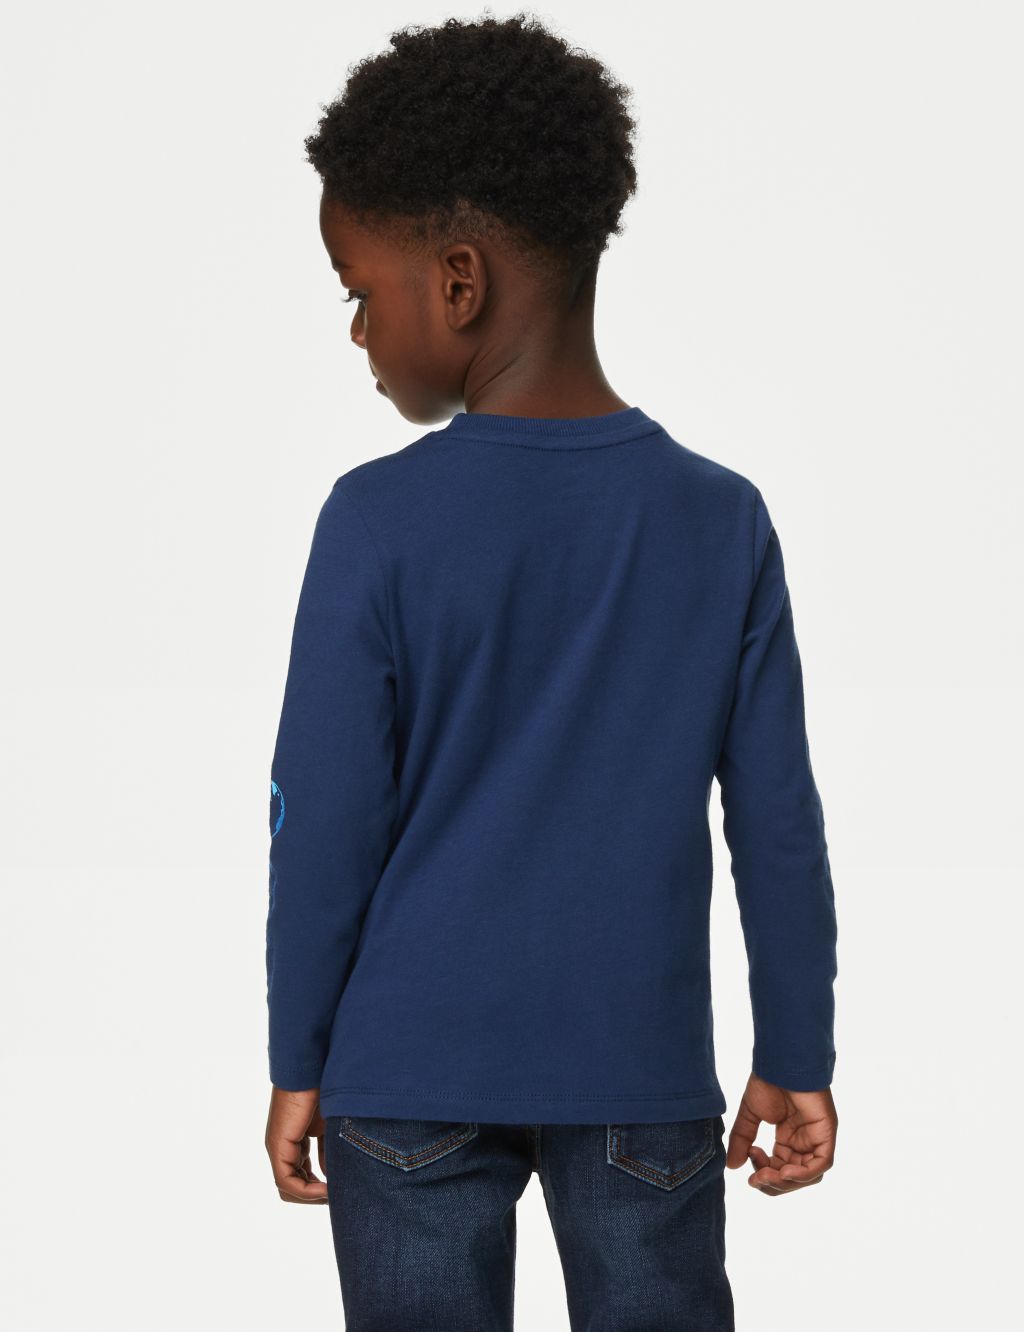 Marks & Spencer Goal Print Crew-Neck T-Shirt For Boys (Black, 11-12Y)